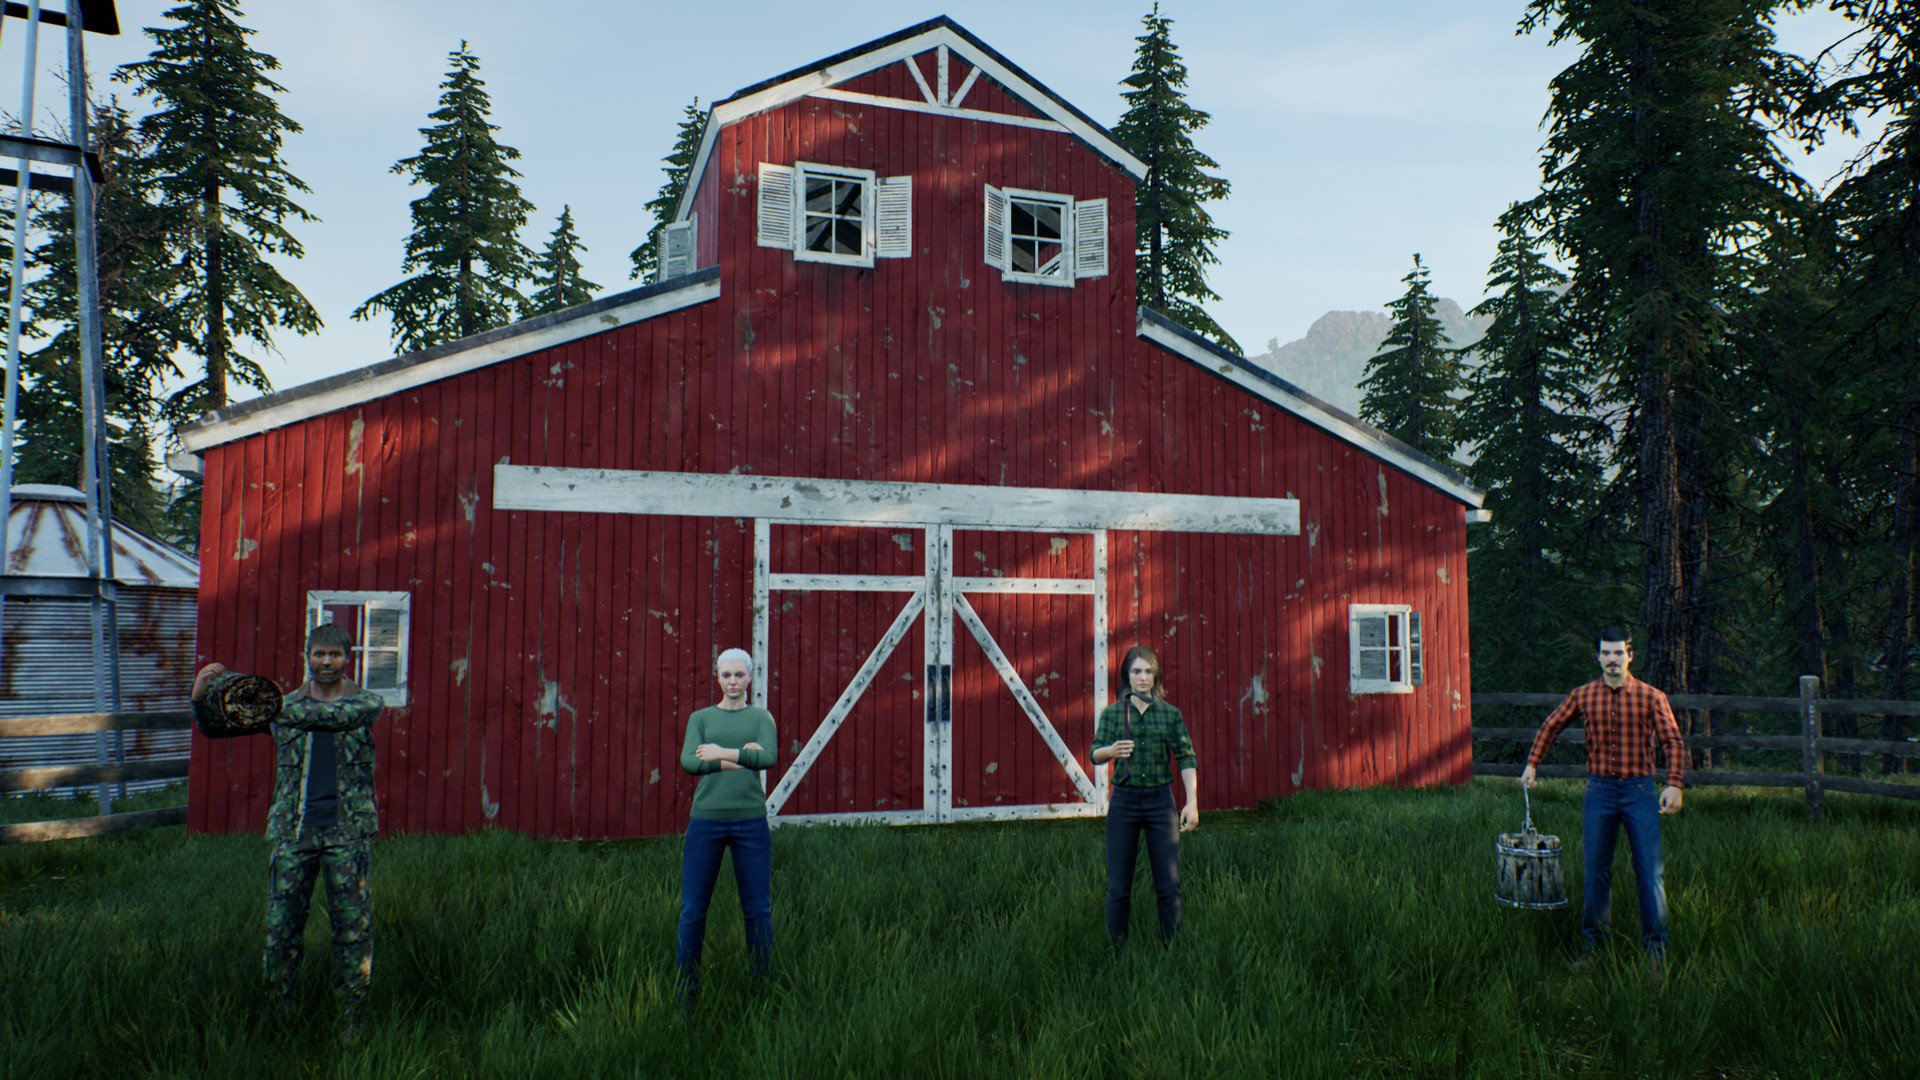 Wario64 on X: Ranch Simulator - Build, Farm, Hunt is $12.49 on